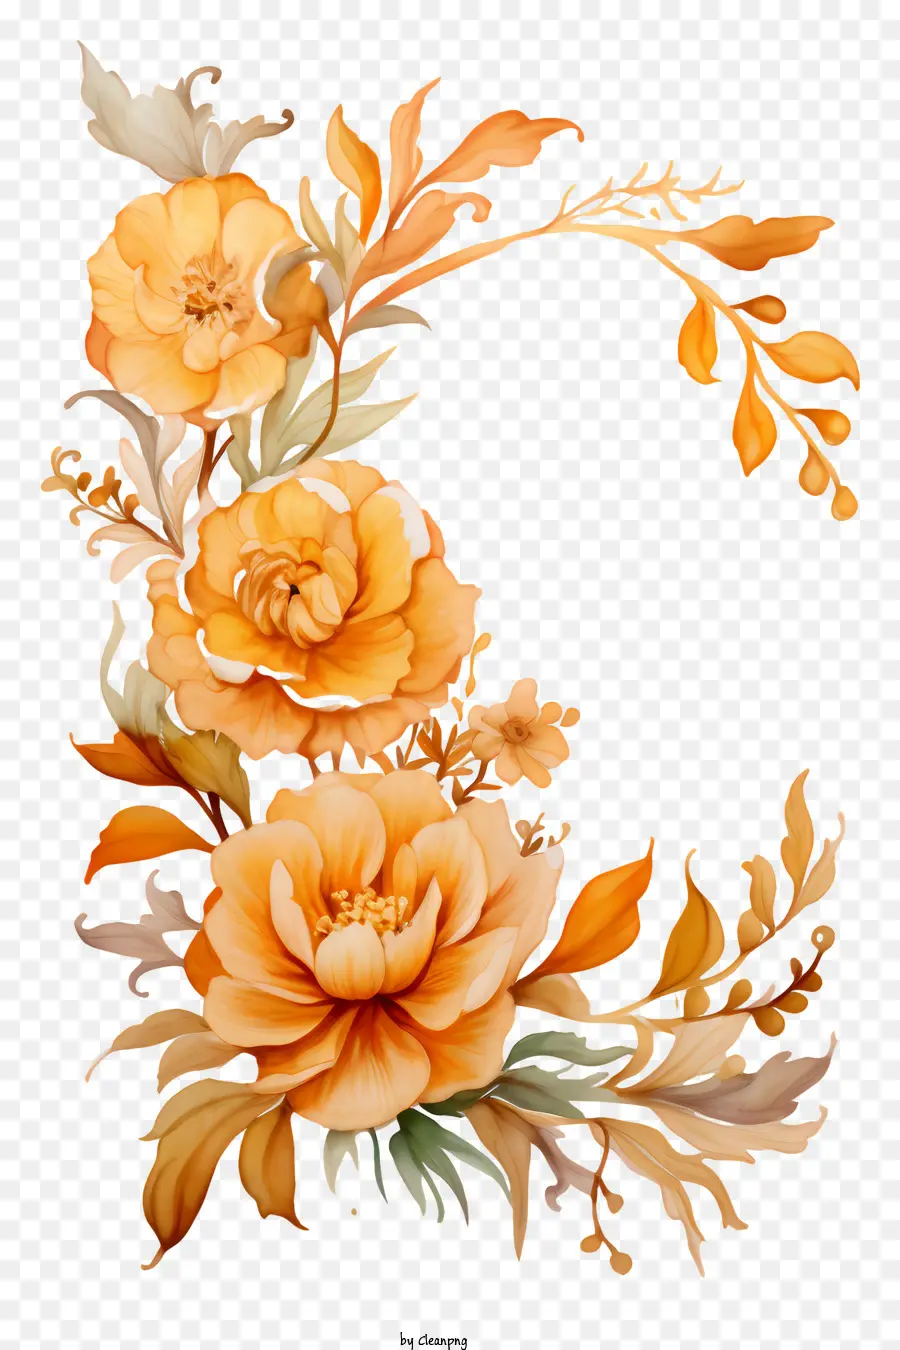 Aquarellmalerei - Detaillierte Aquarellmalerei von orangefarbenem Blumenkranz